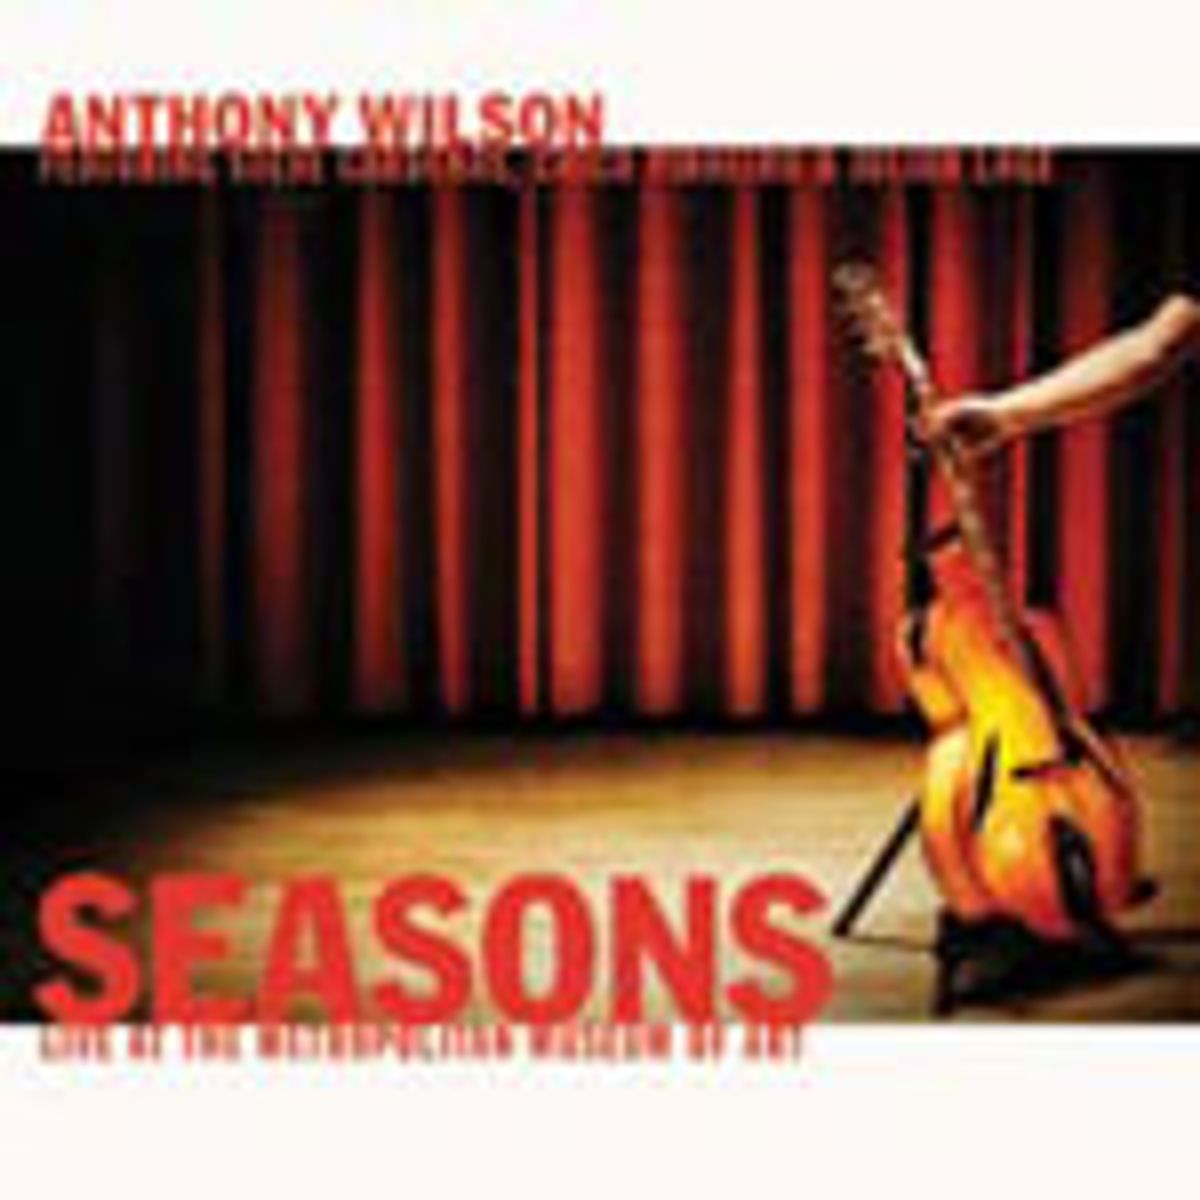 Album/DVD Review: Anthony Wilson - Seasons, Live at the Metropolitan Museum of Art